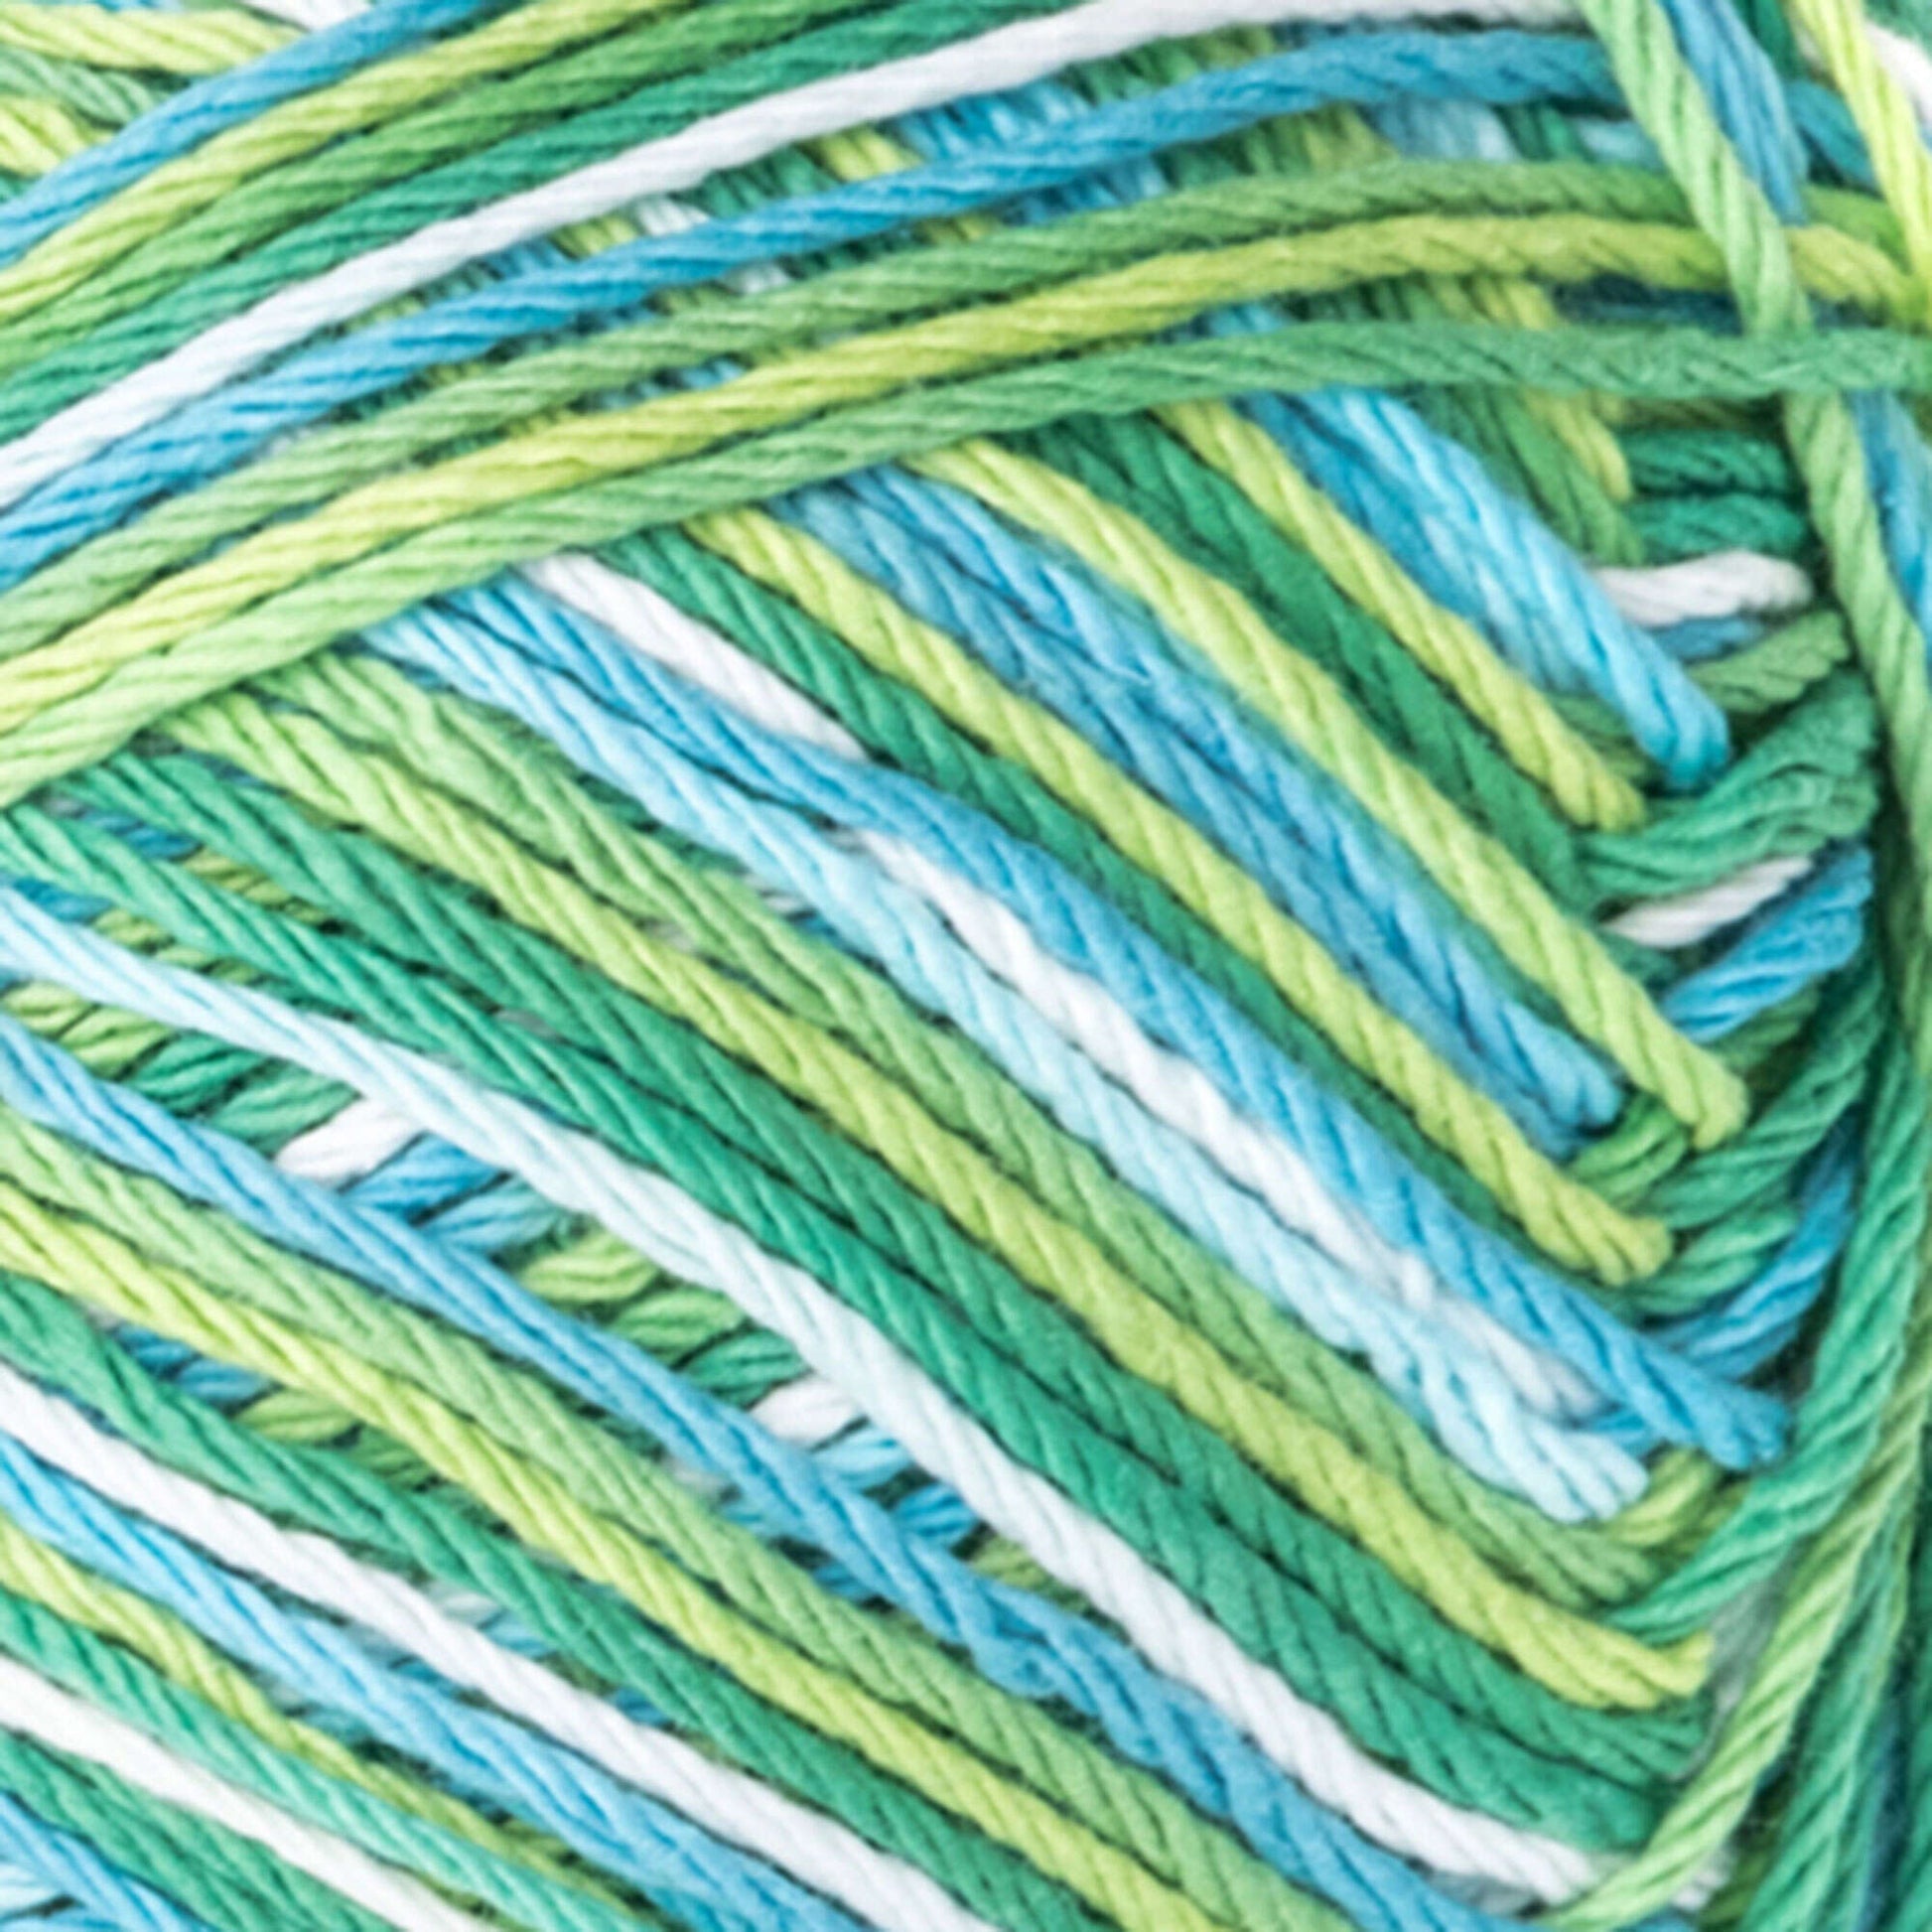 Bernat Handicrafter Cotton Ombres Yarn (340g/12oz) Emerald Energy